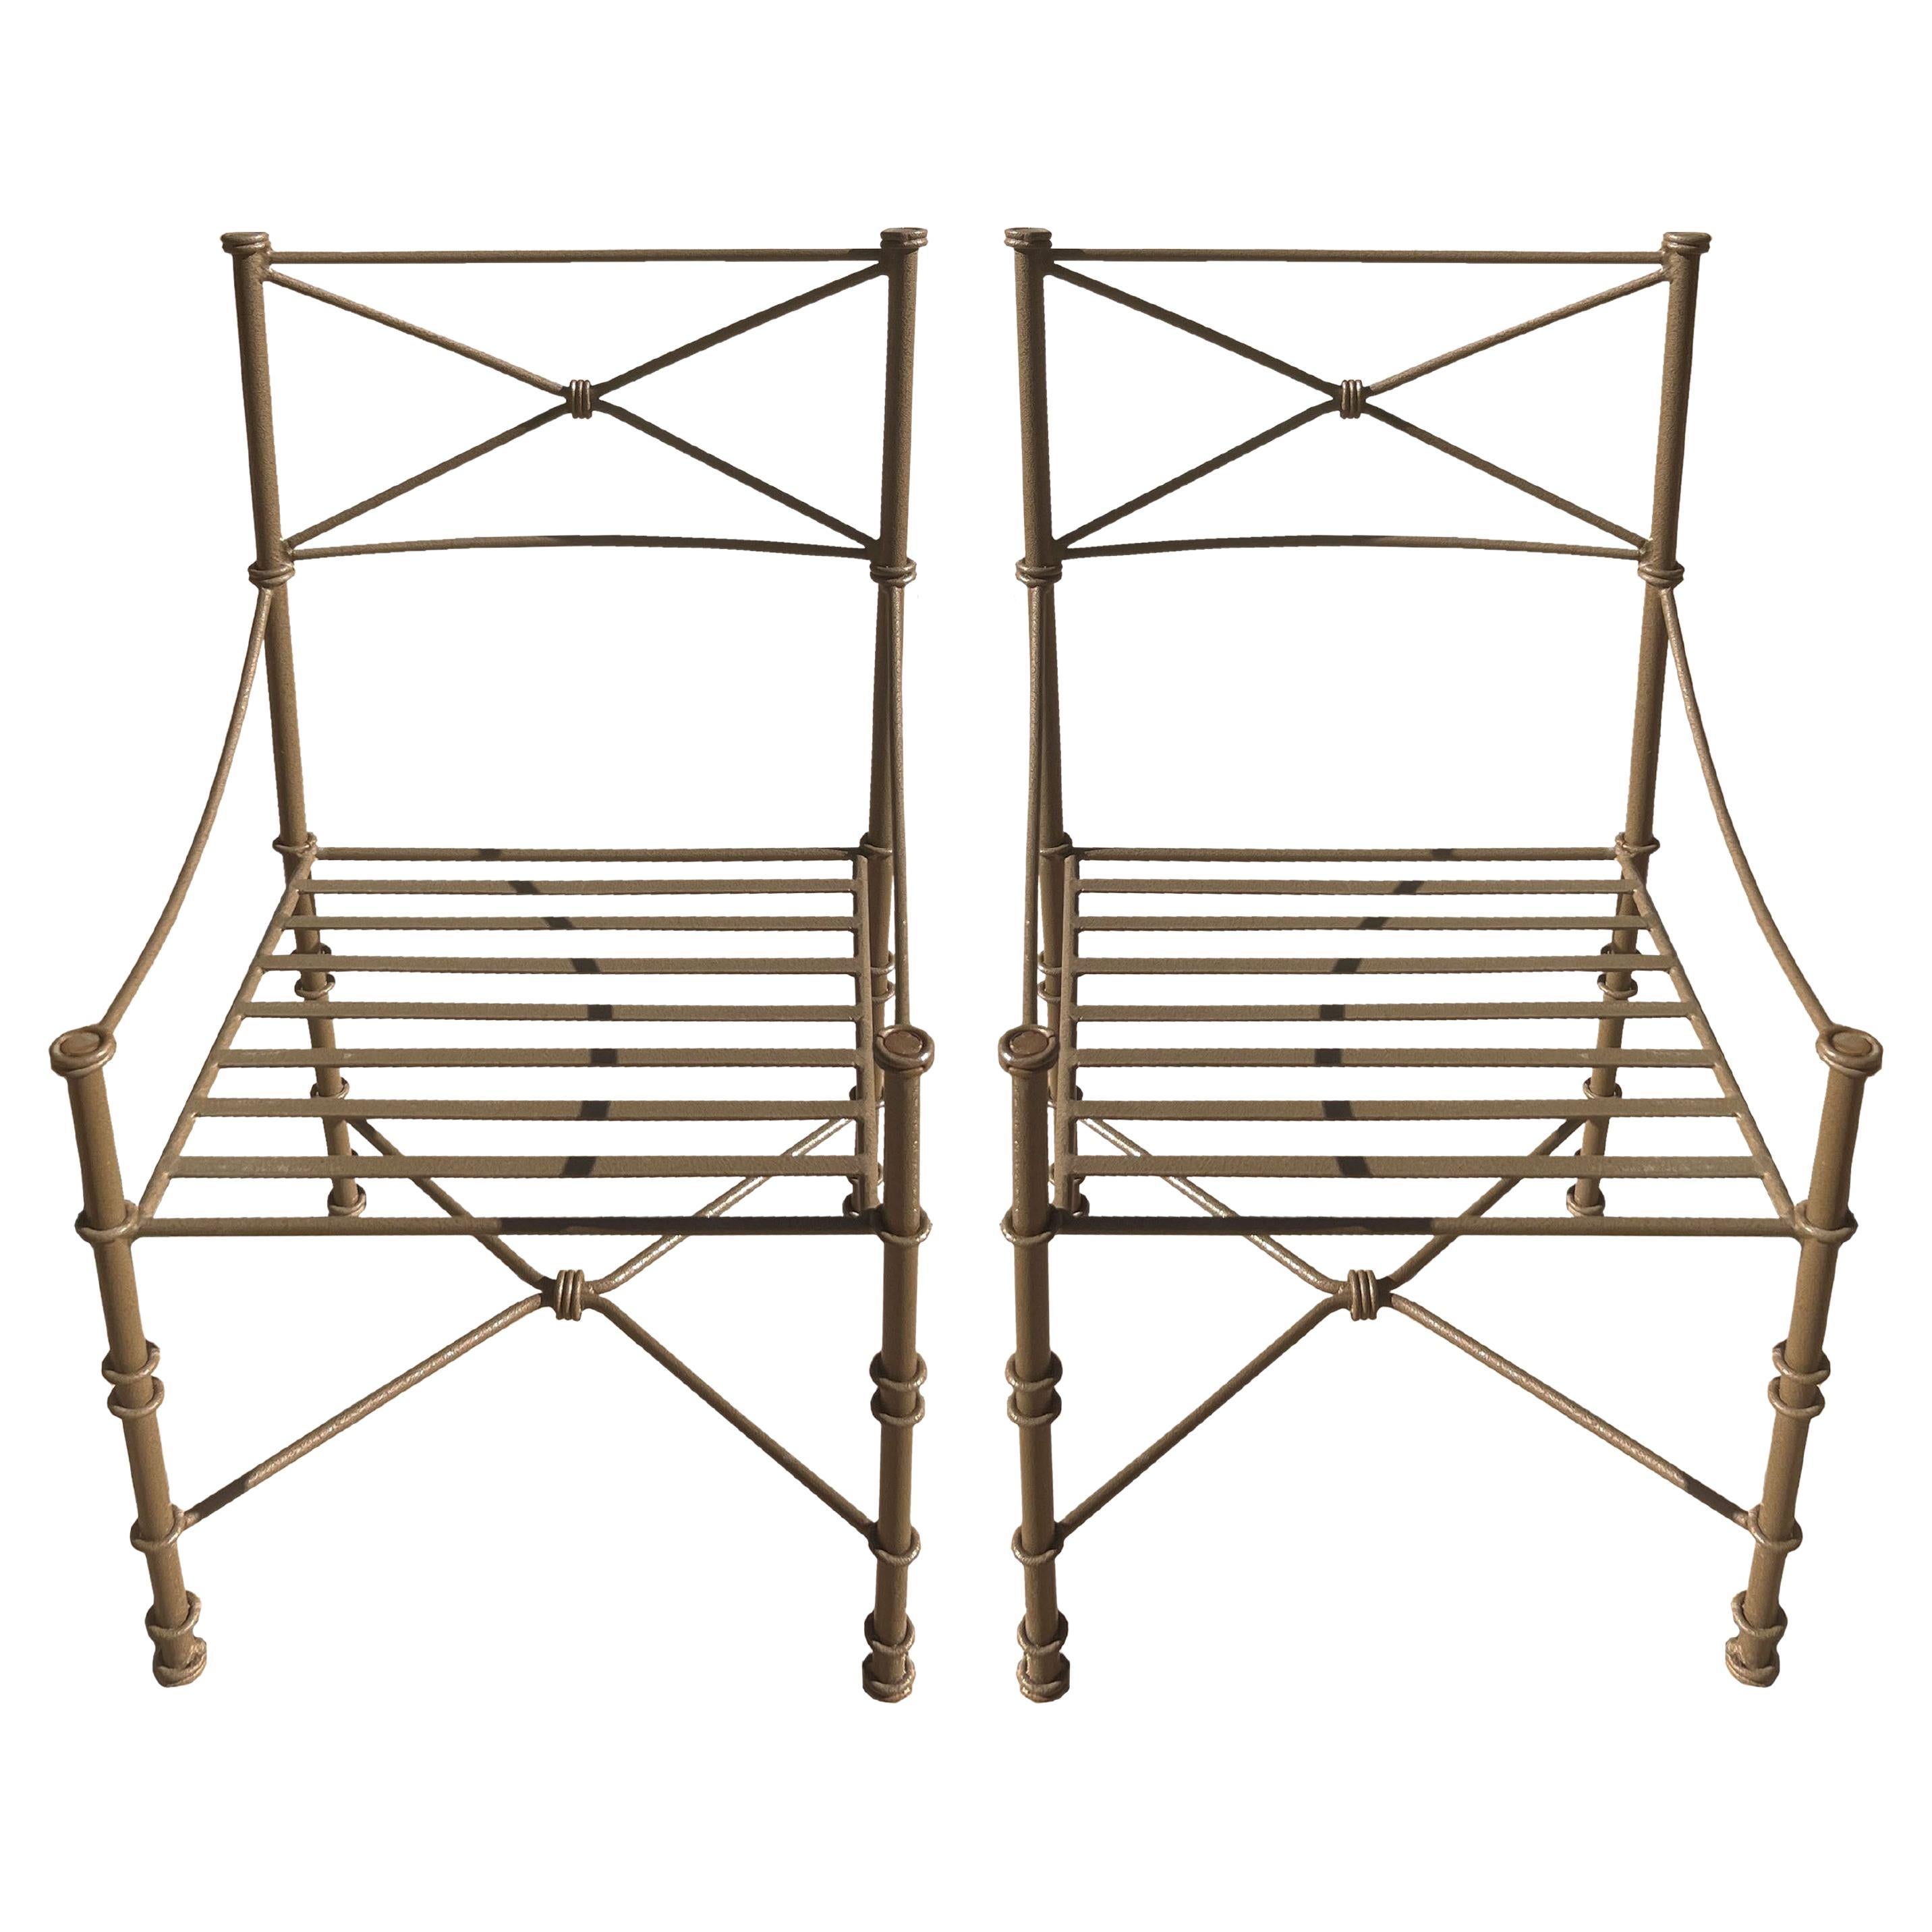 Giacometti Style Iron Chairs 'Set of 2'